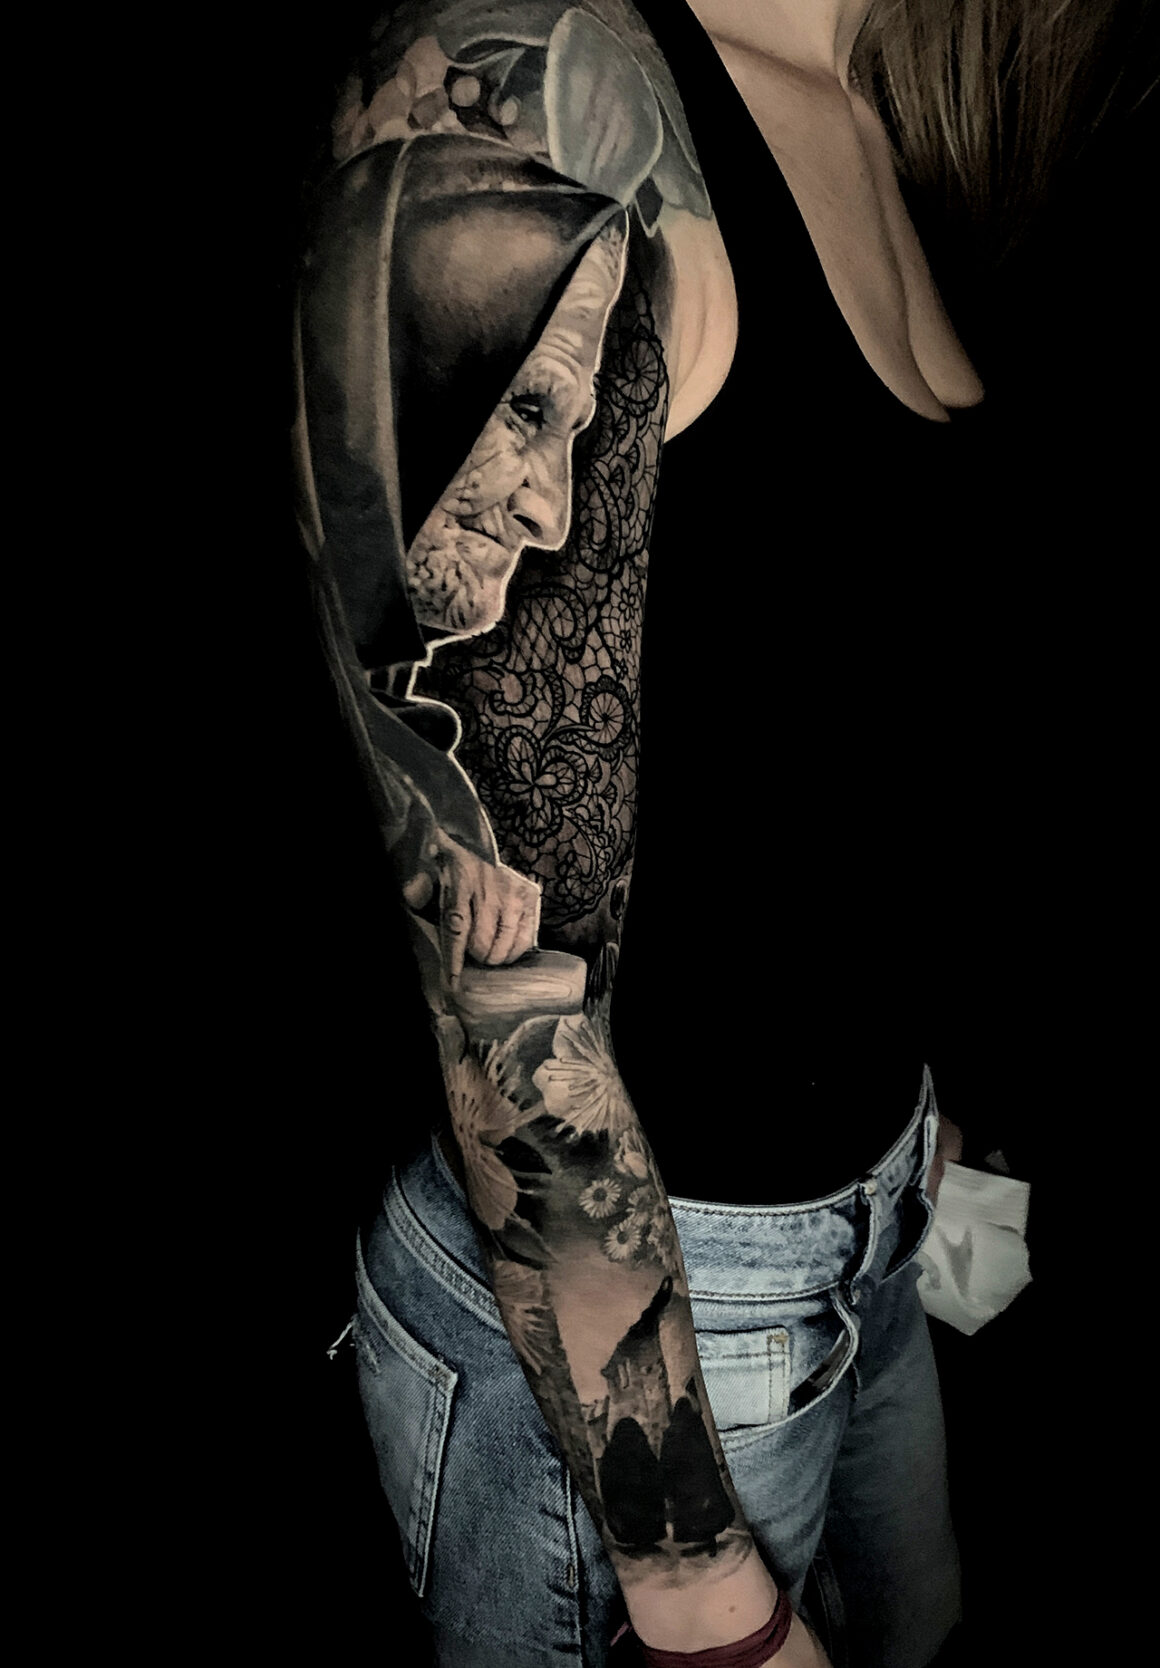 Tattoo by Carmine Tentacles, @carminetentacles